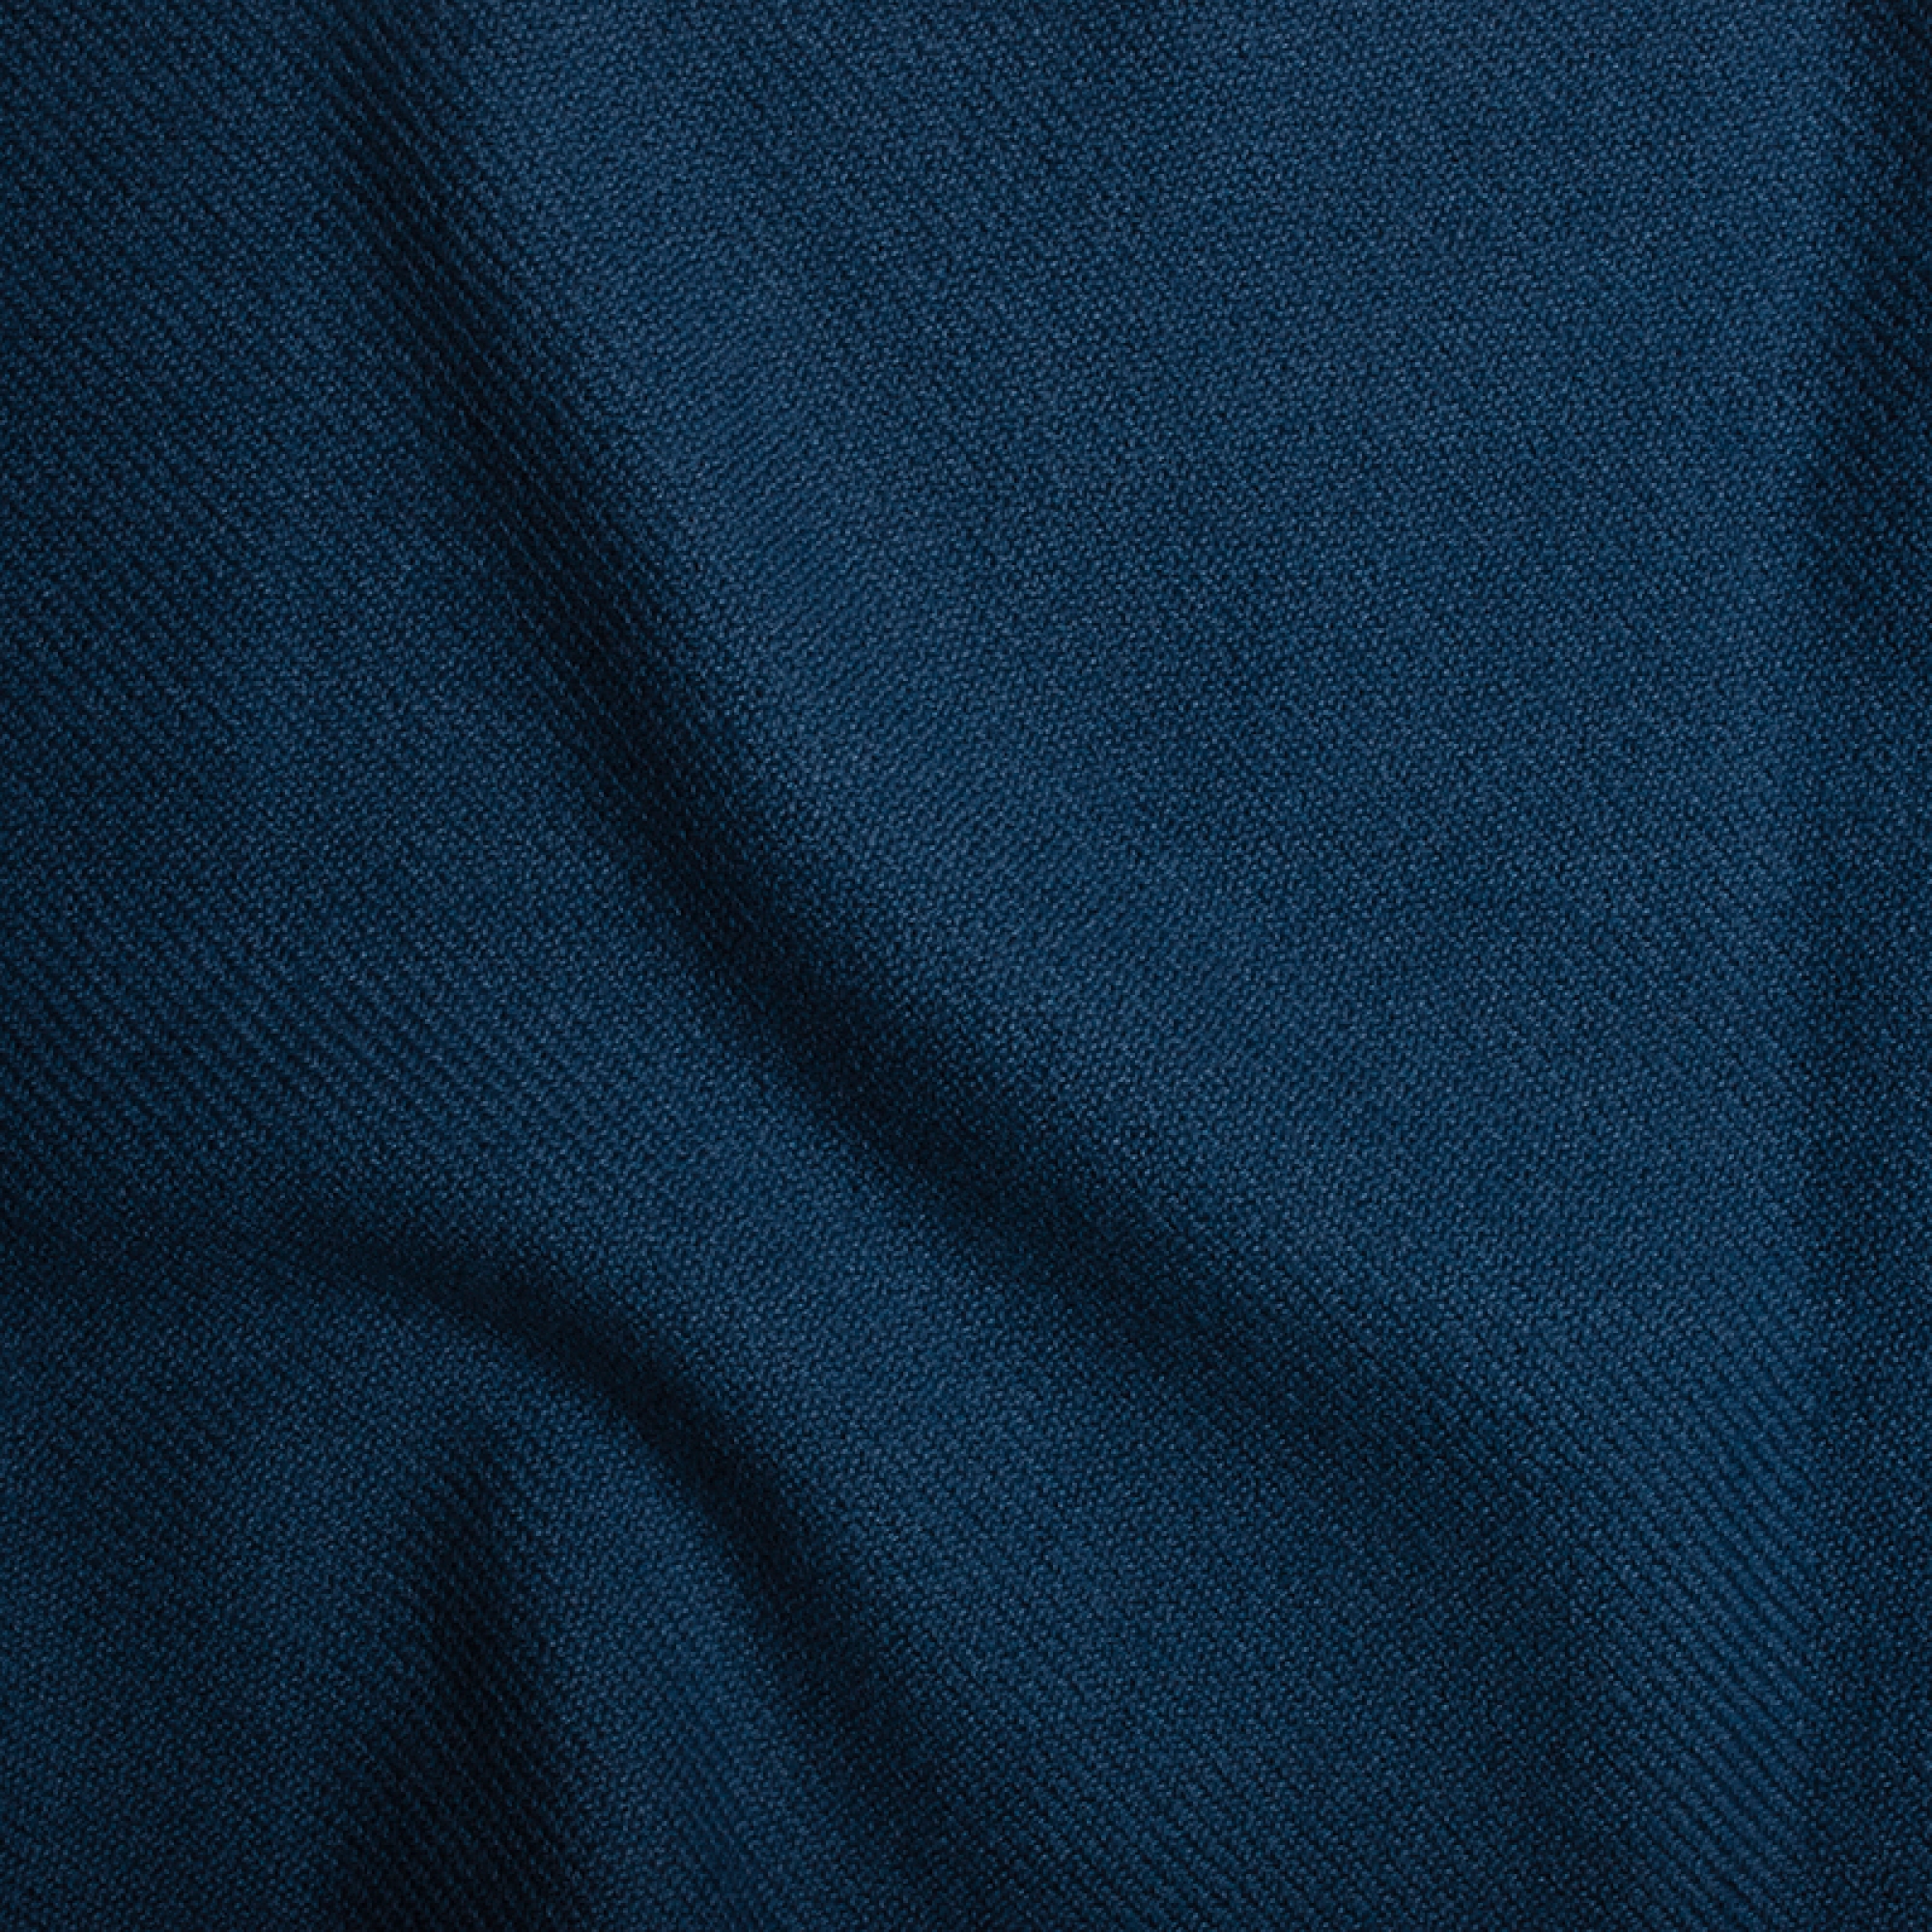 Cashmere men toodoo plain l 220 x 220 dark blue 220x220cm